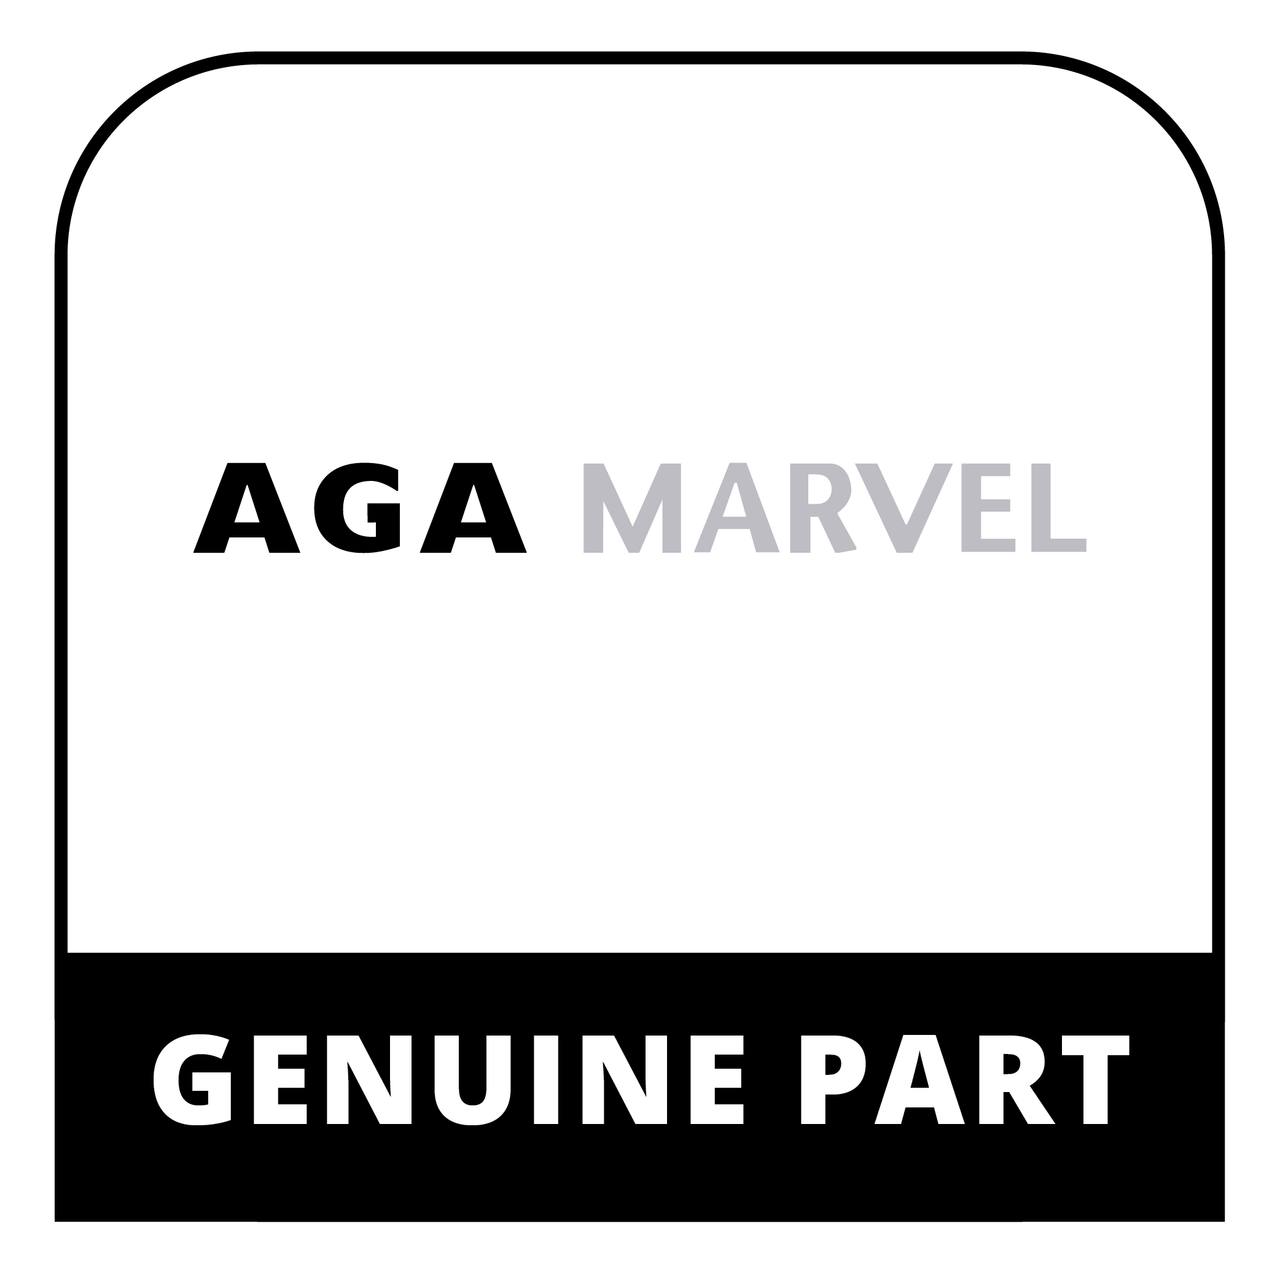 AGA Marvel RO4M999414 - Ignitor Leads B09-292R 480K - Genuine AGA Marvel Part